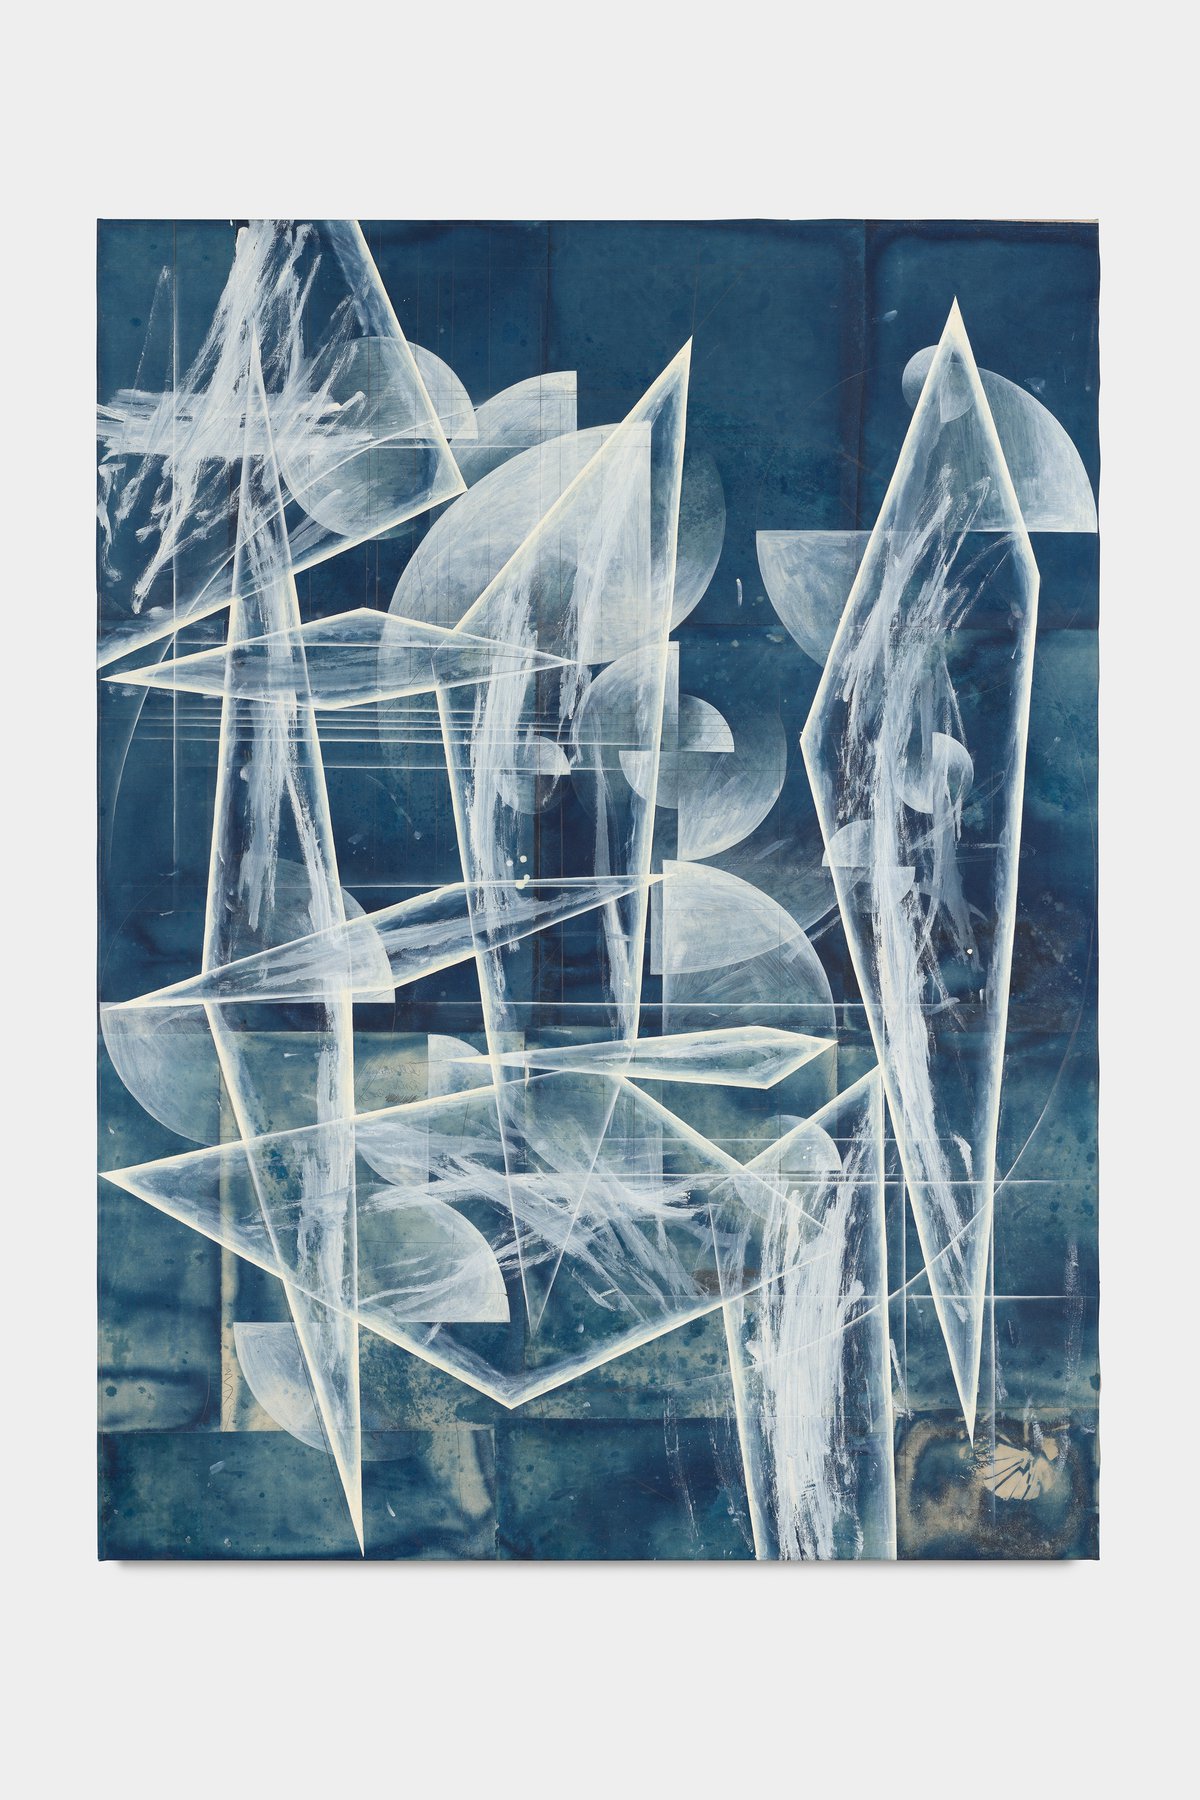 Tillman KaiserLa voix des airs, 2021Oil/egg tempera on cyanotype on paper &amp; canvas200 x 150 cm